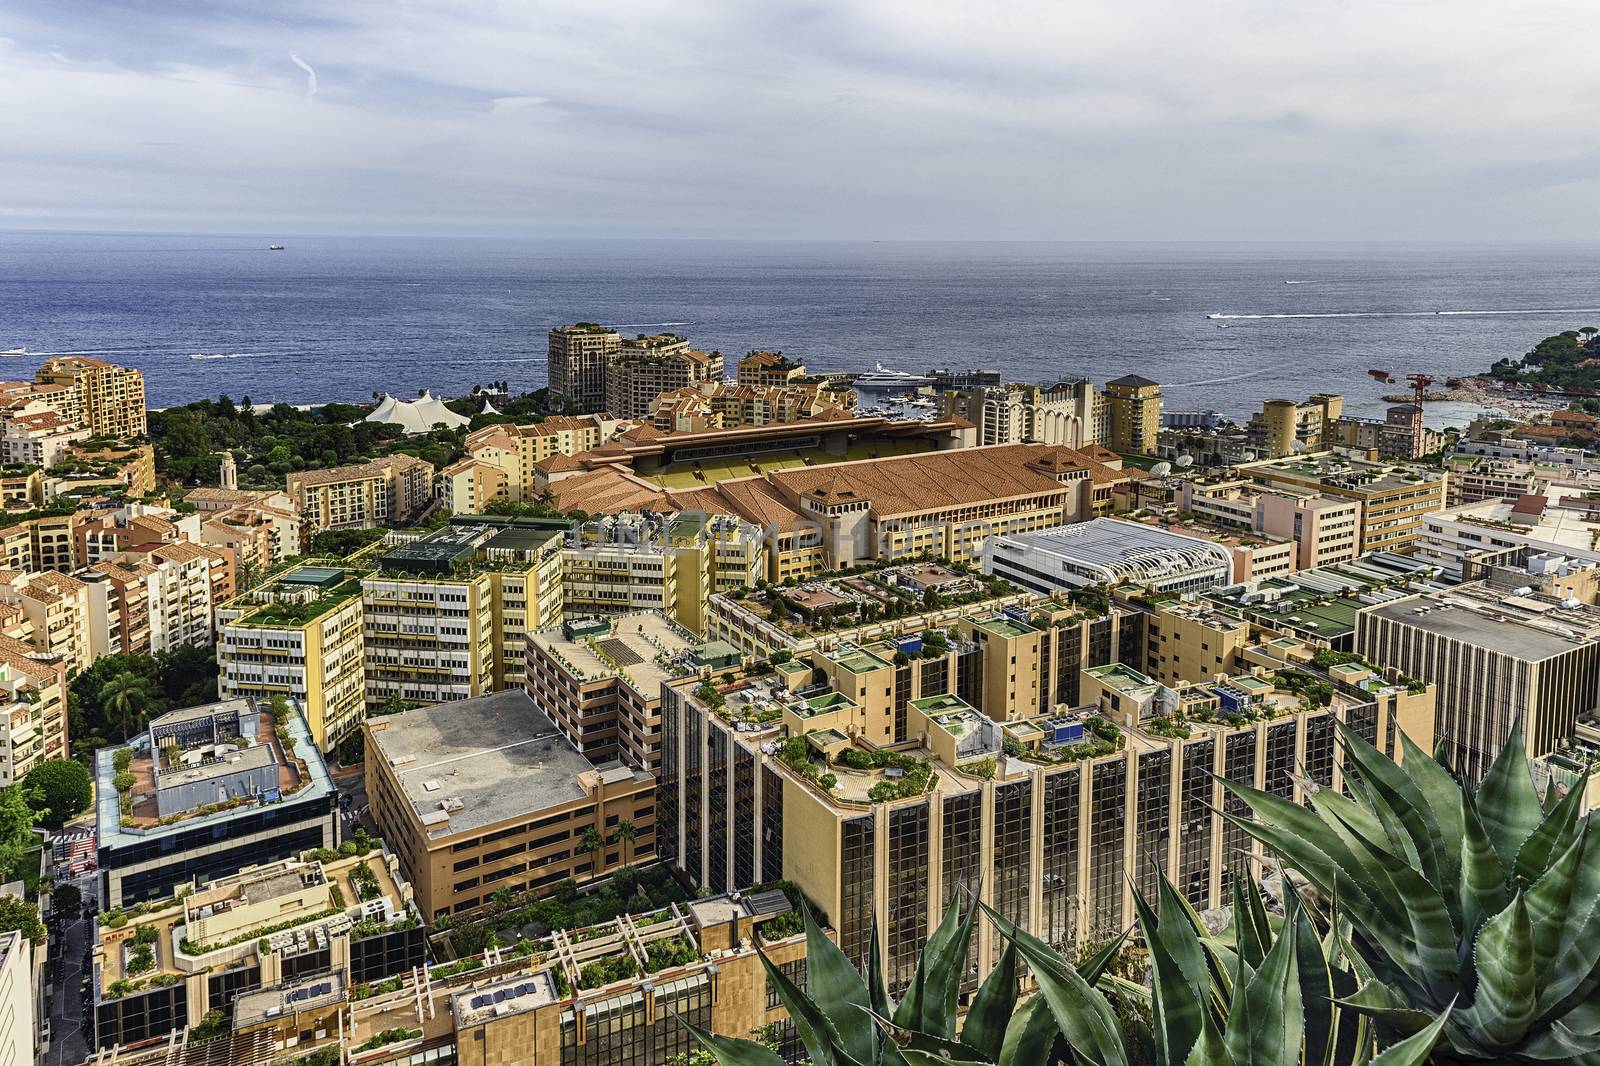 Aerial view of the Louis II stadium, Principality of Monaco by marcorubino